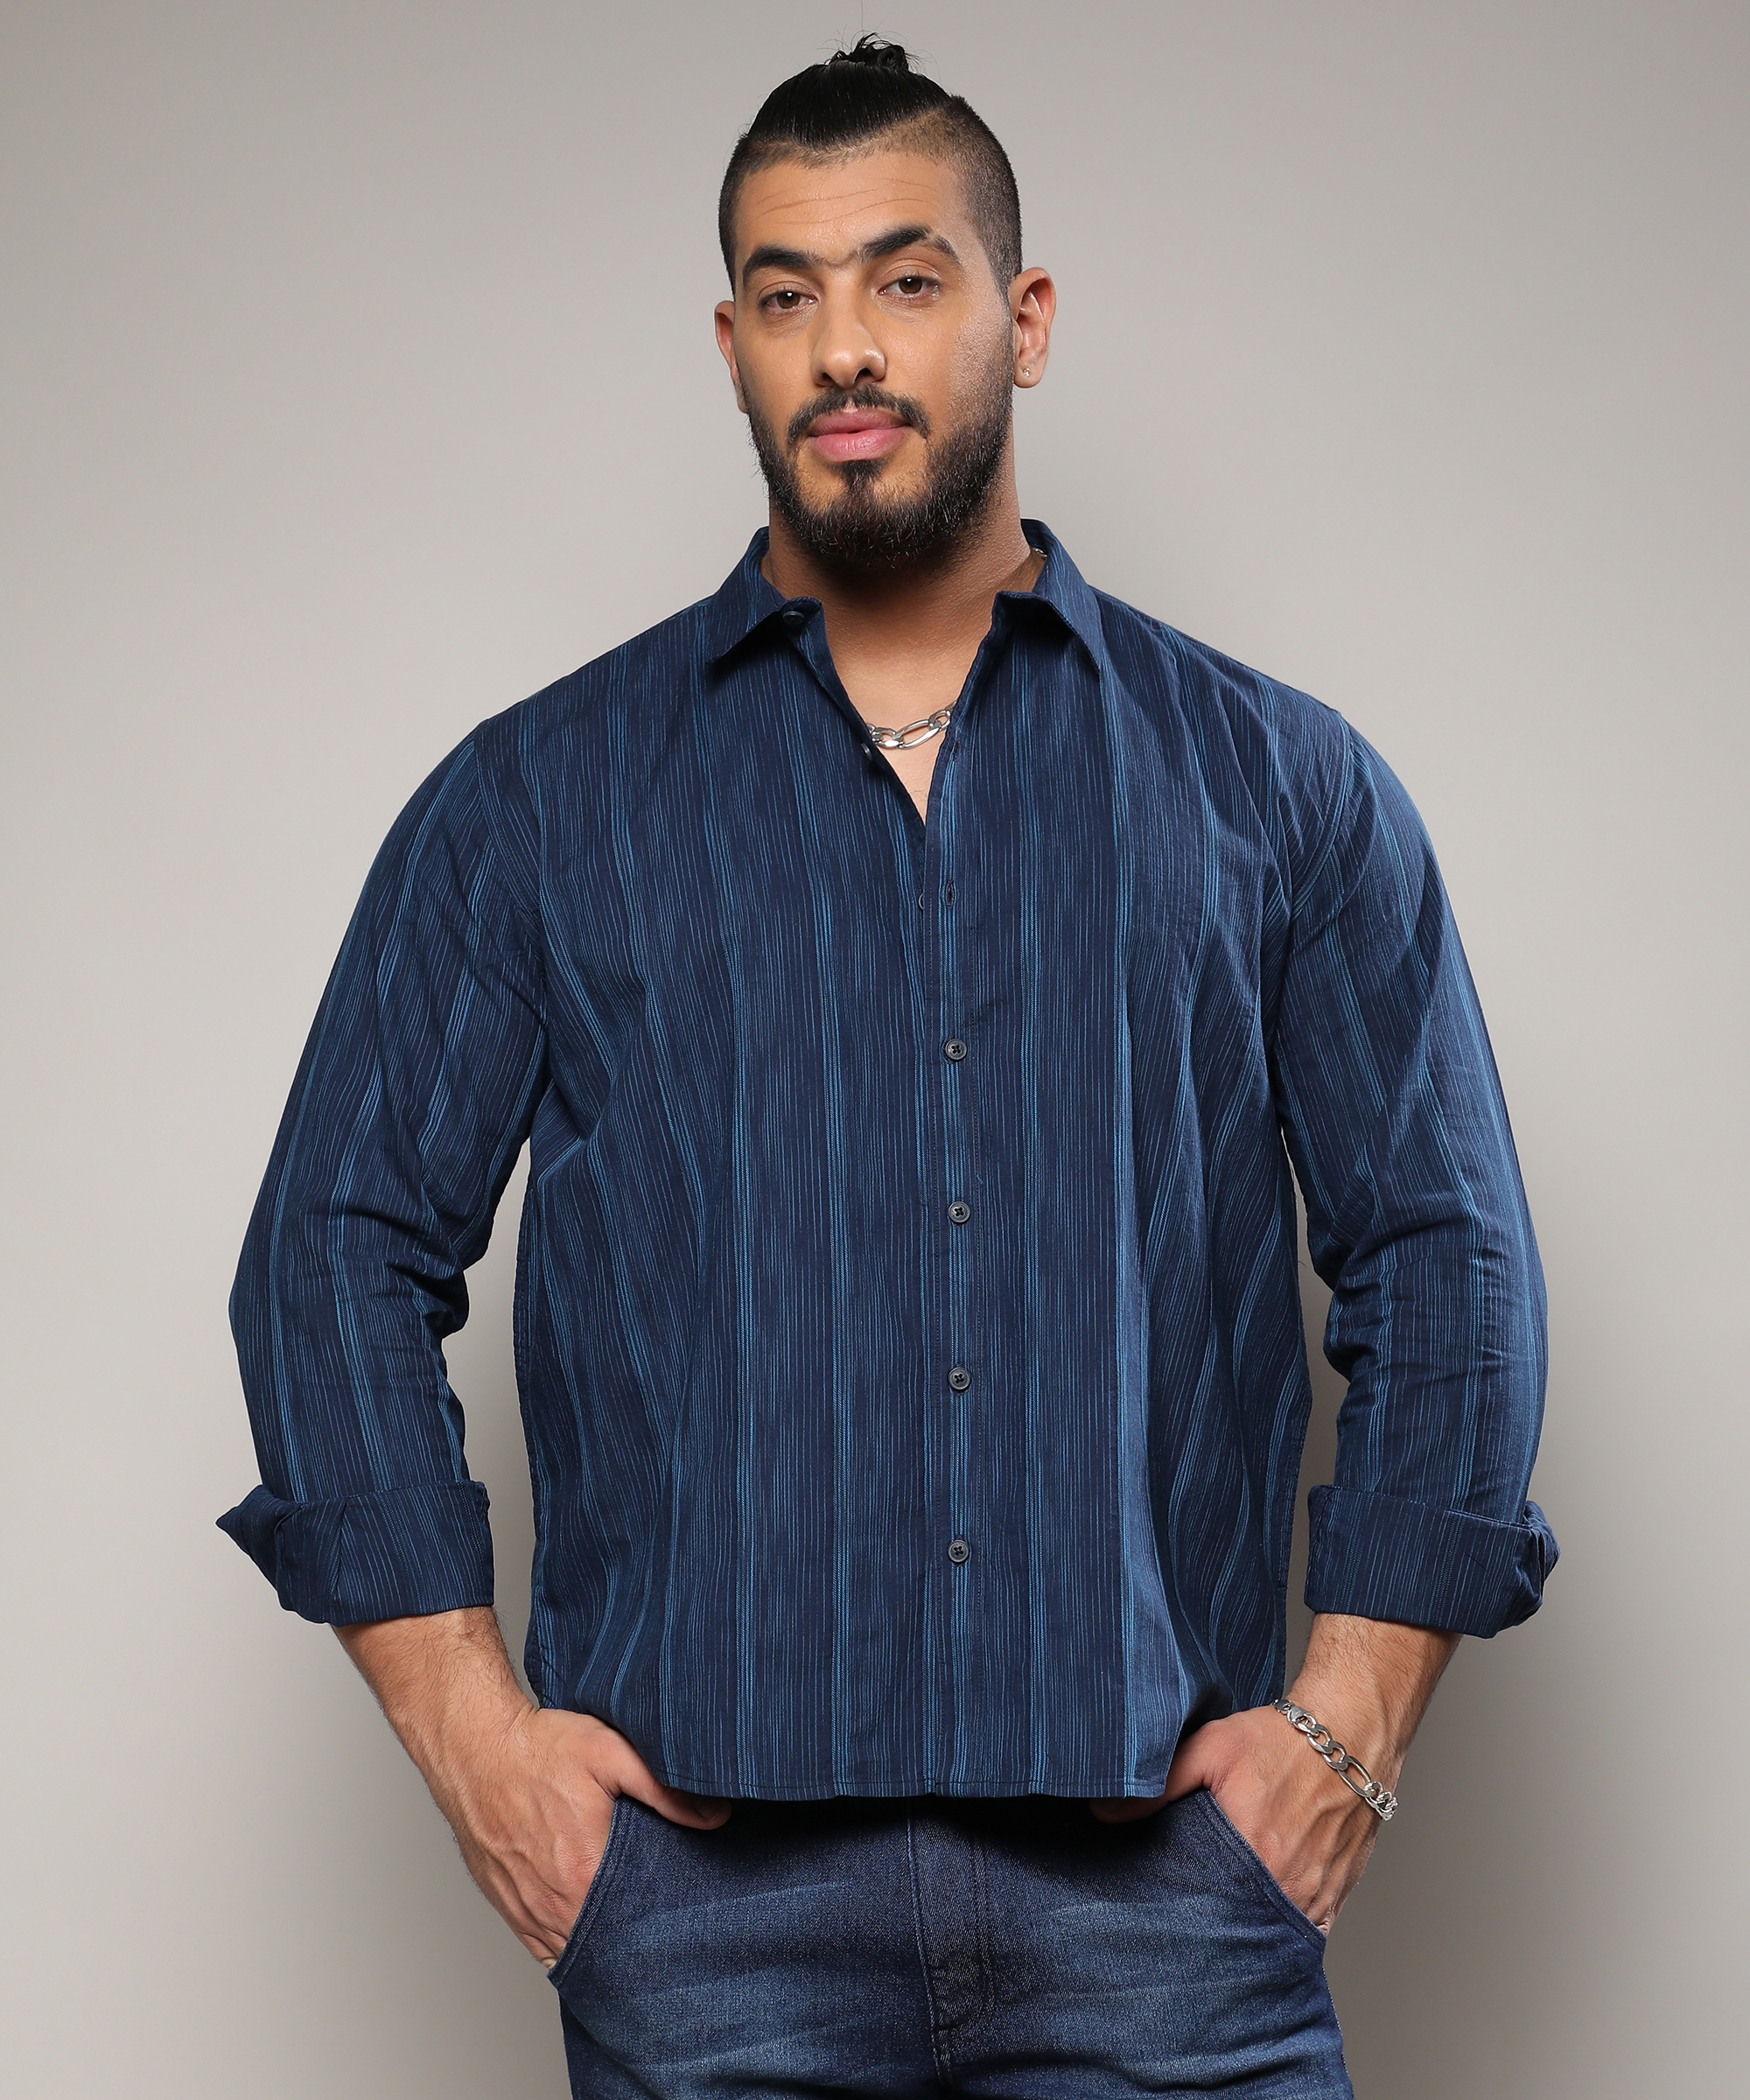 Men's Navy Blue Ombre Striped Shirt